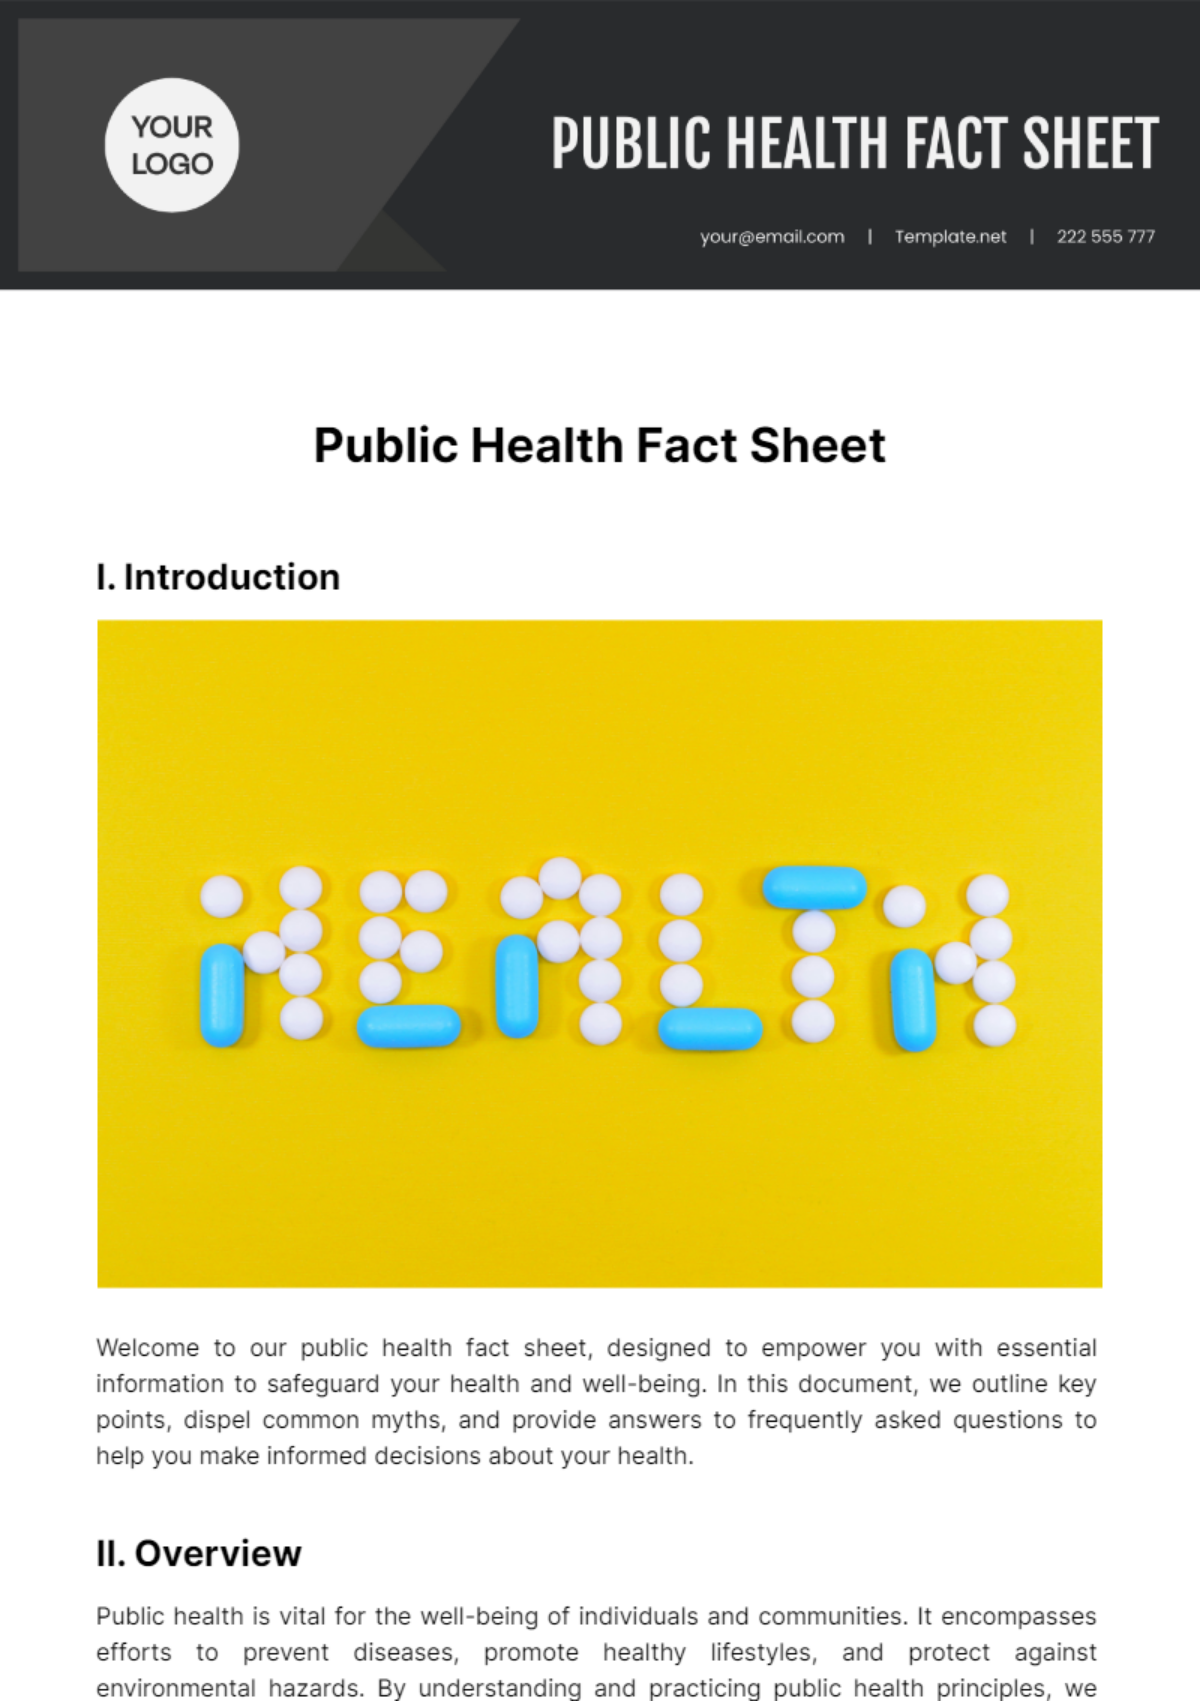 Public Health Fact Sheet Template